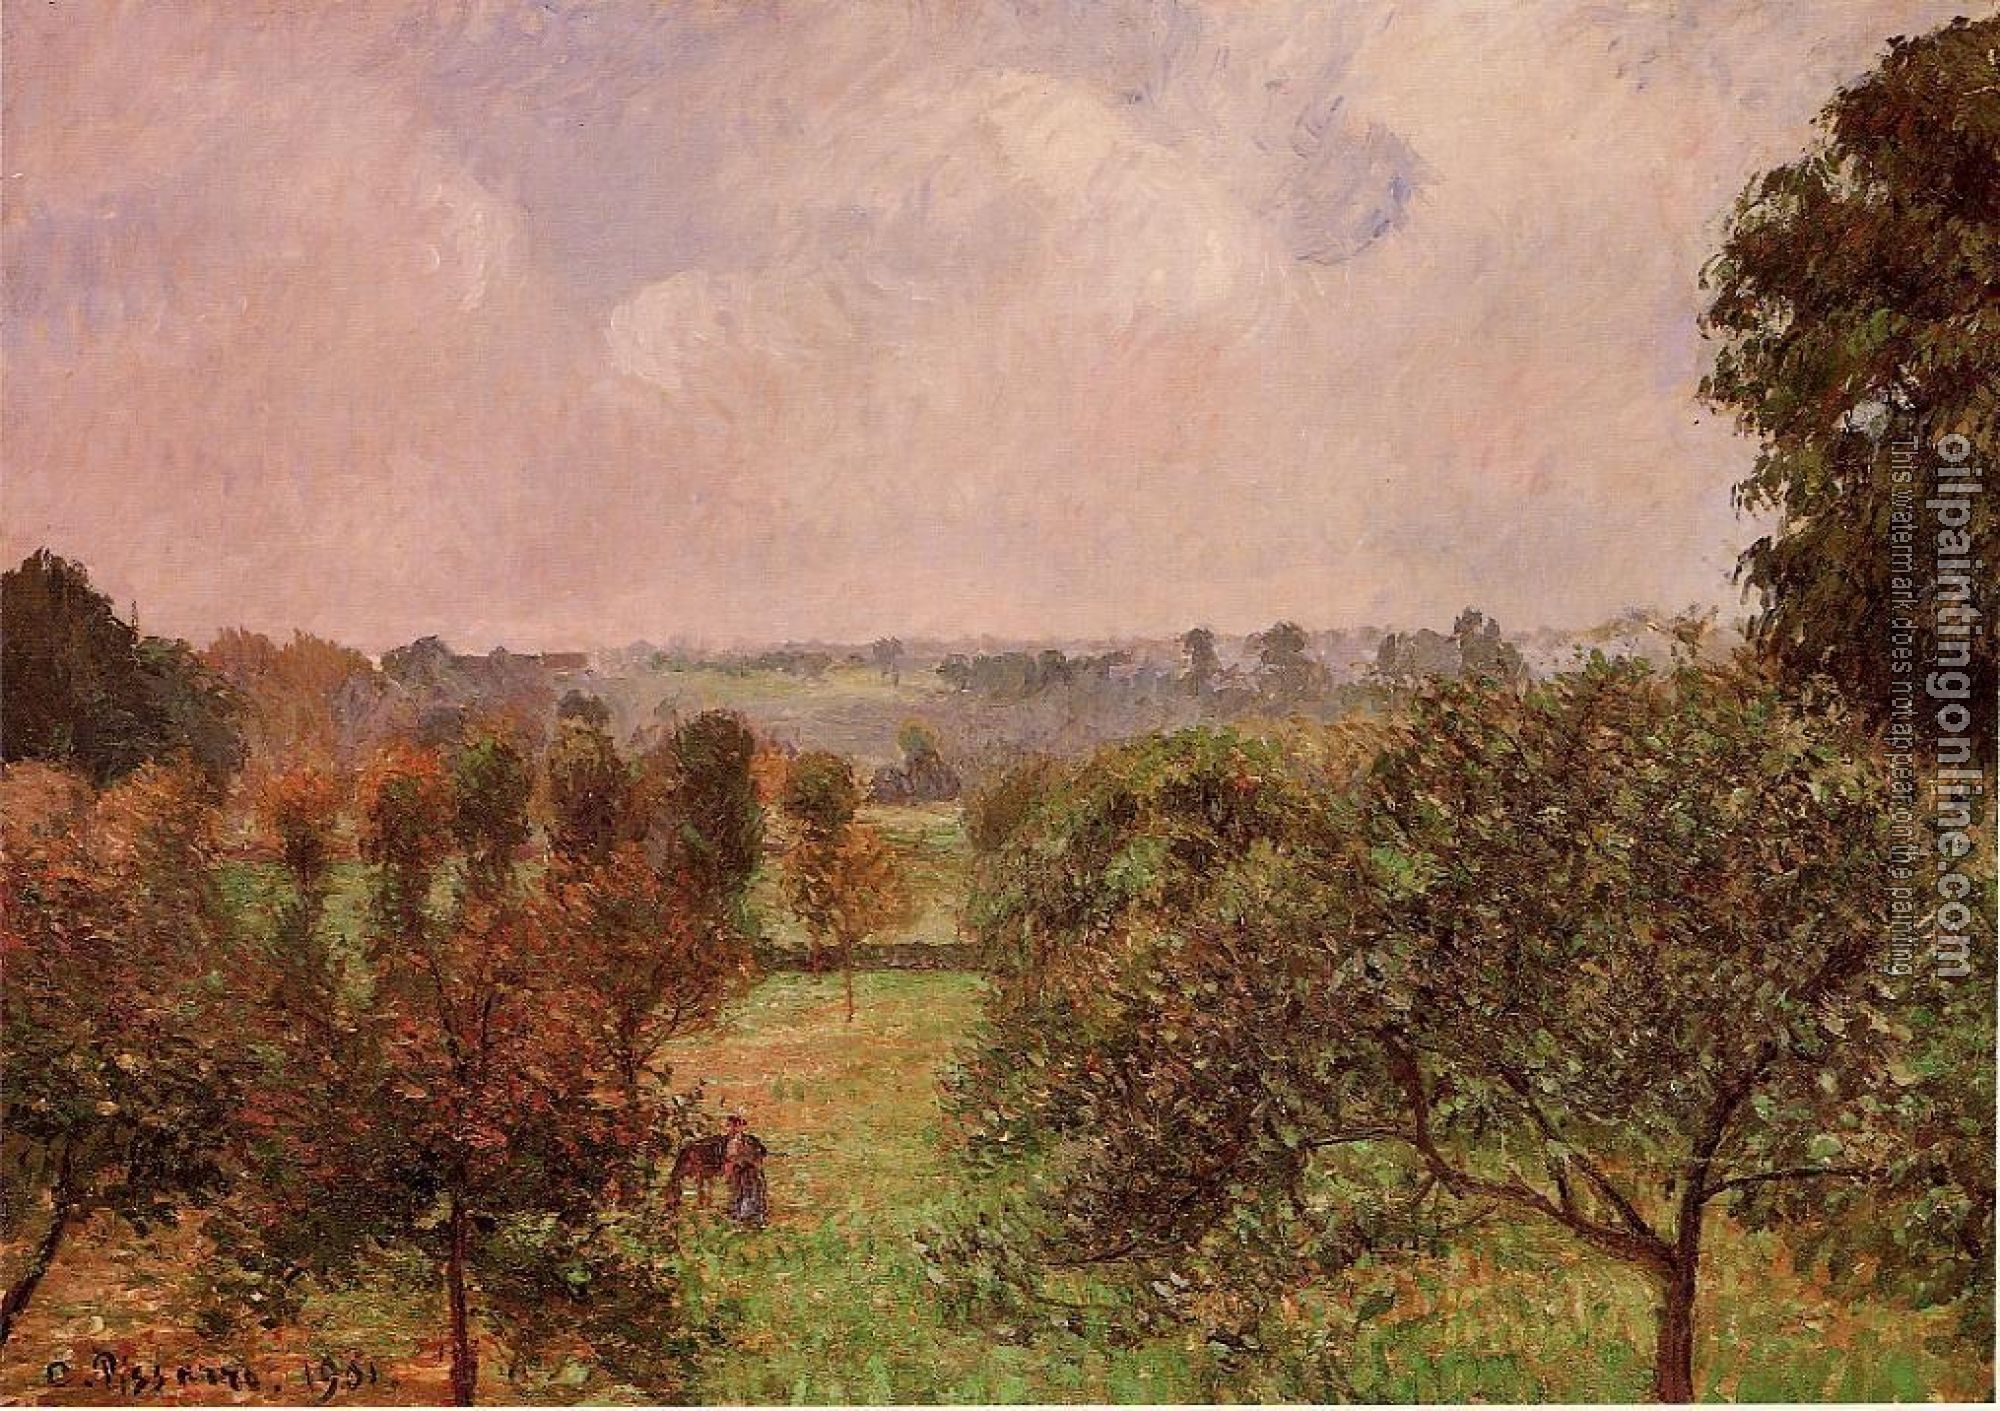 Pissarro, Camille - After the Rain, Autumn, Eragny